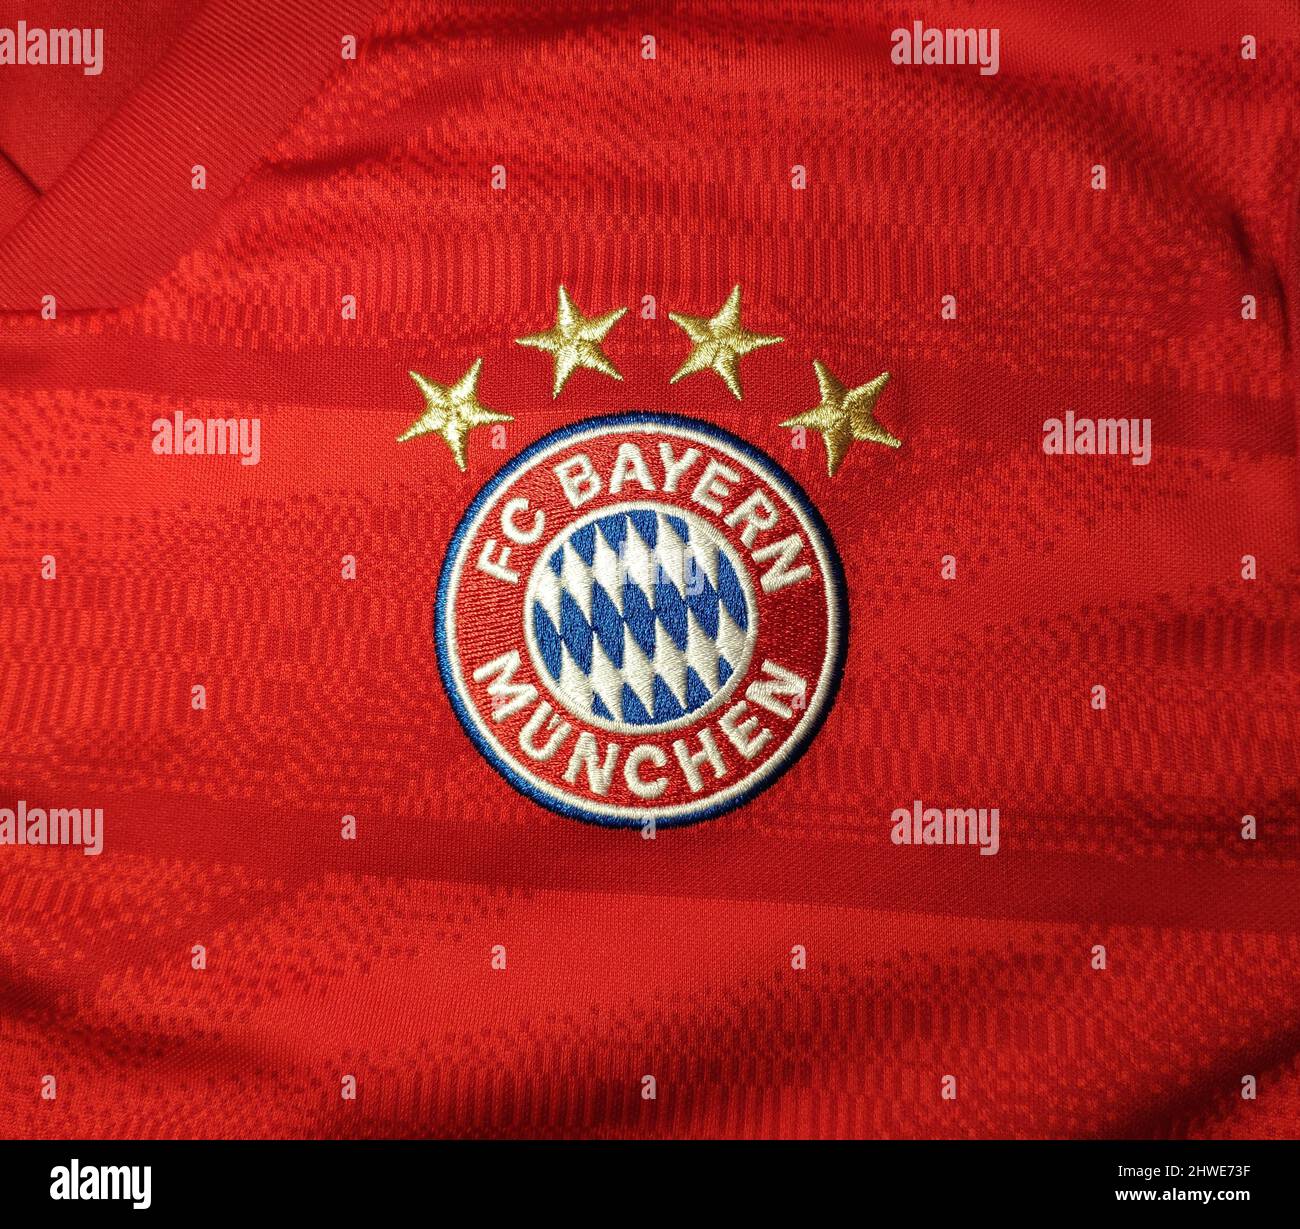 FC Bayern München (Munich) logo emblem on the red and white jersey background Stock Photo